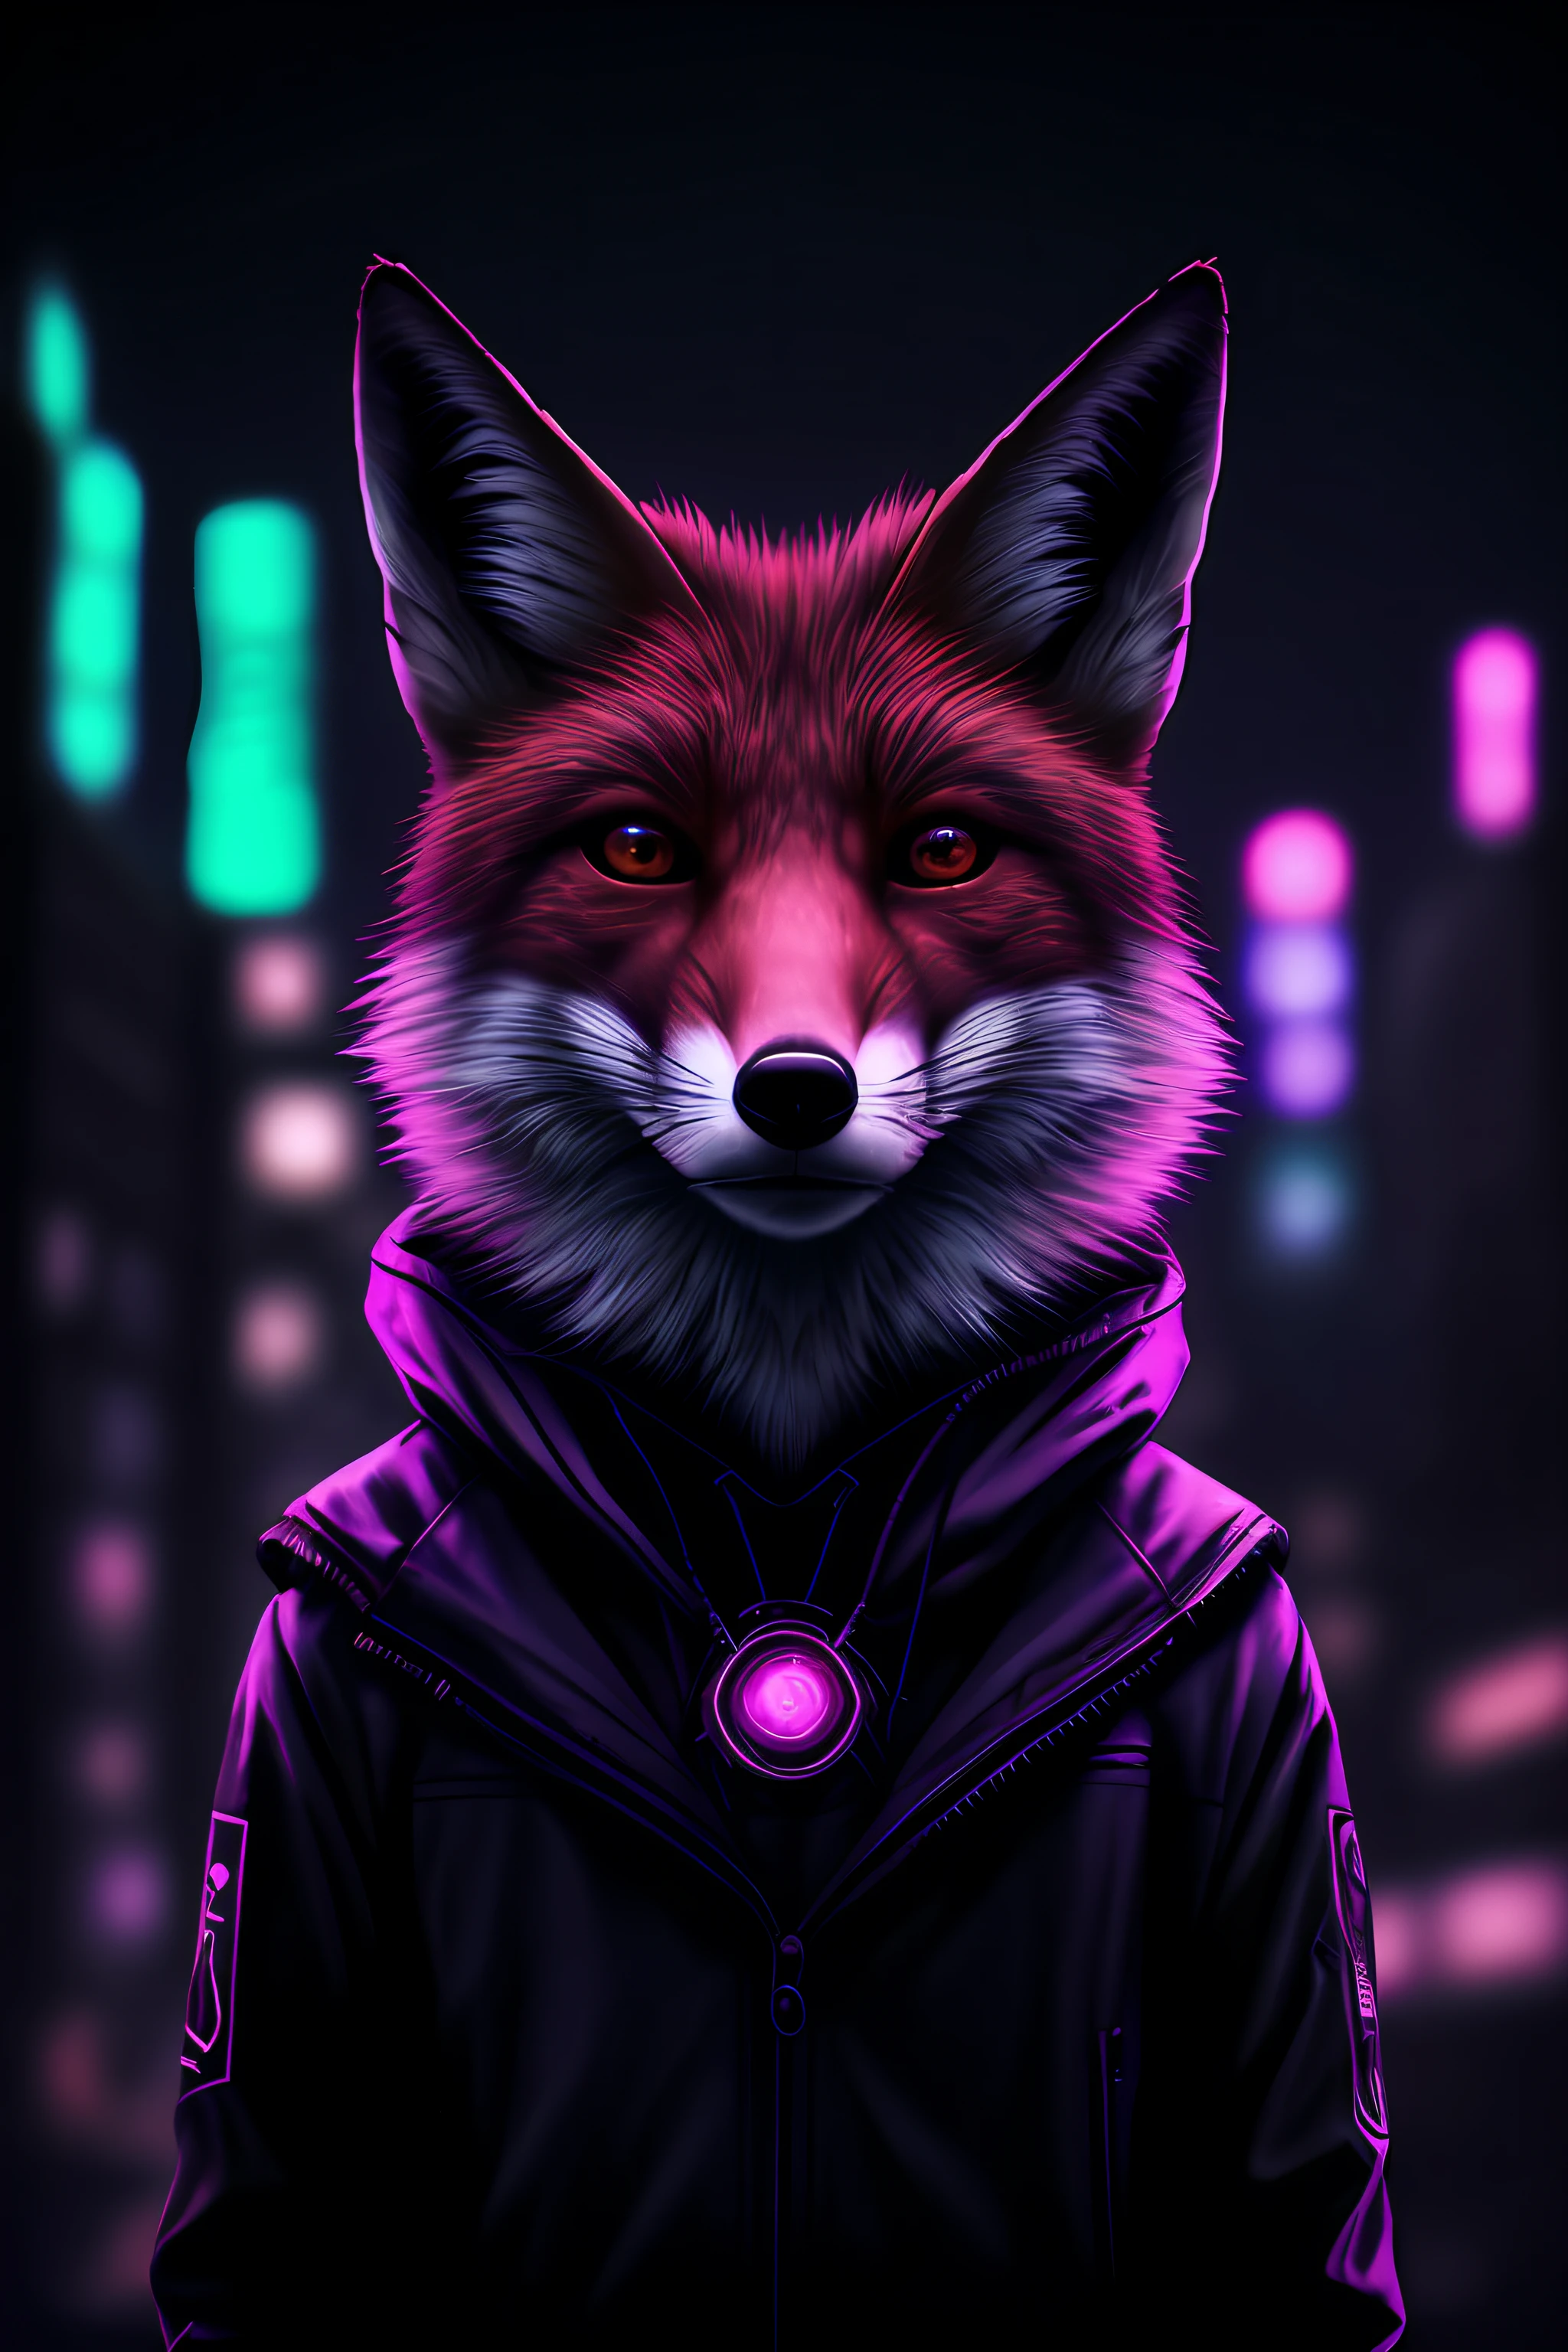 hyperrealistic, portrait of fox, animal, cyberpunk city, cold color, night, cinematic light, purple neon light, bokeh, rim light